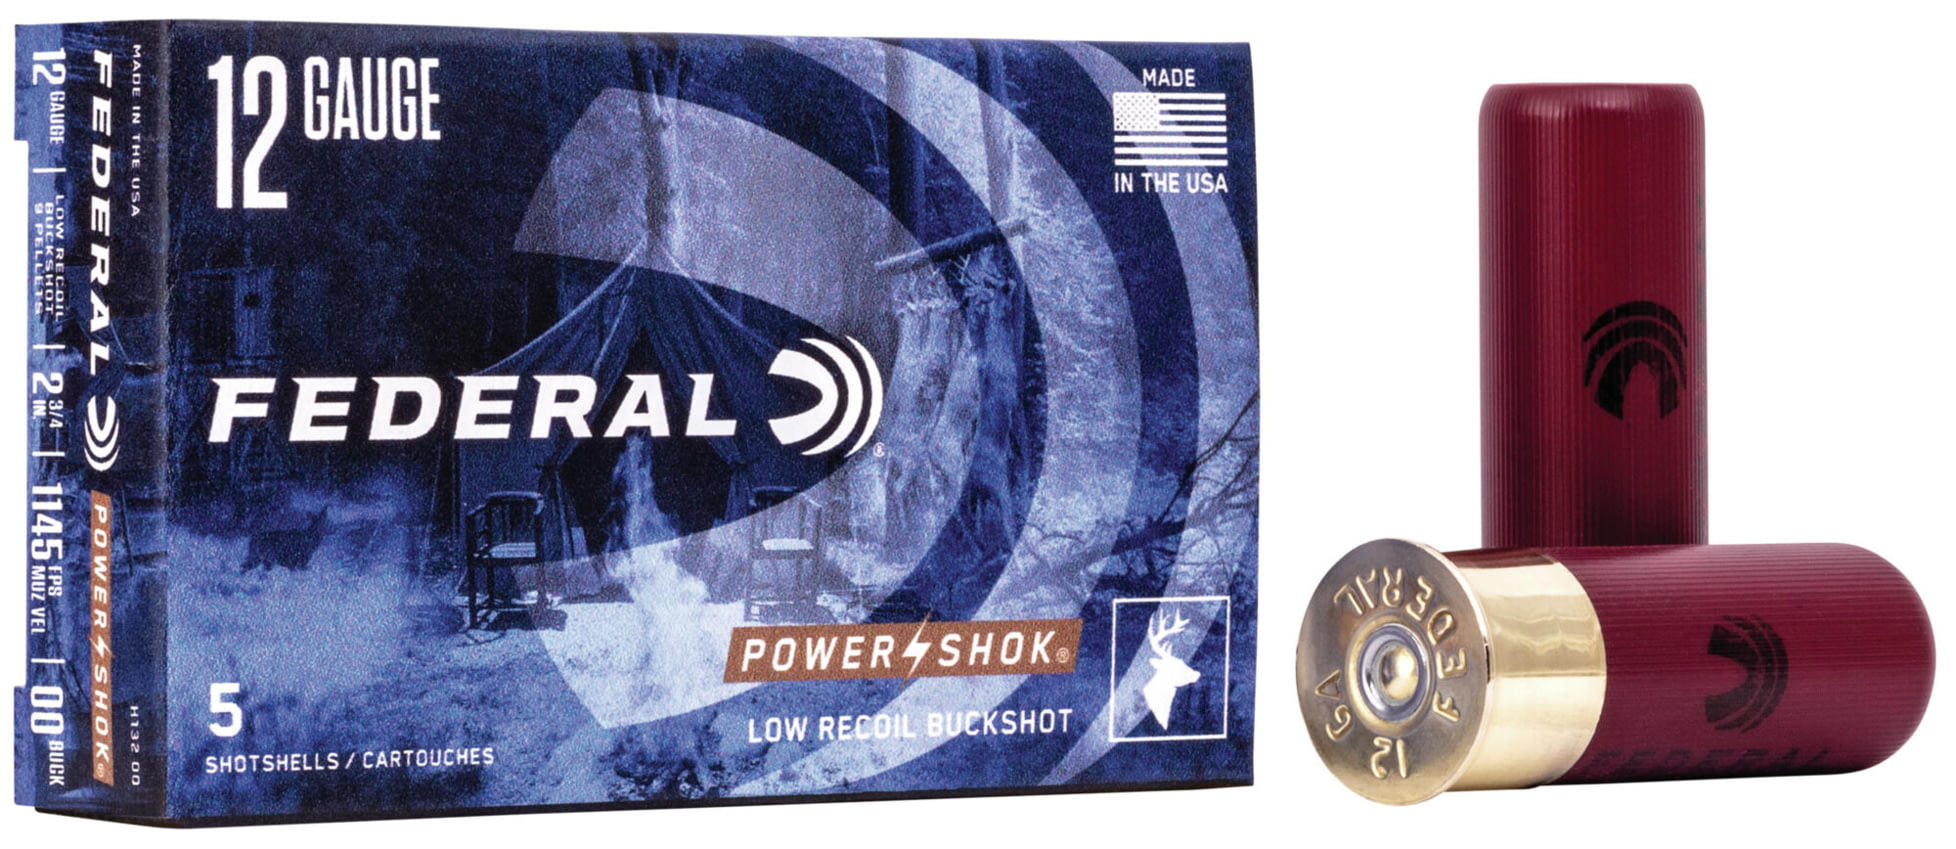 Federal Premium Power Shok 12 Gauge 9 Pellets Power Shok Buckshot - Low Recoil Centerfire Shotgun Ammunition